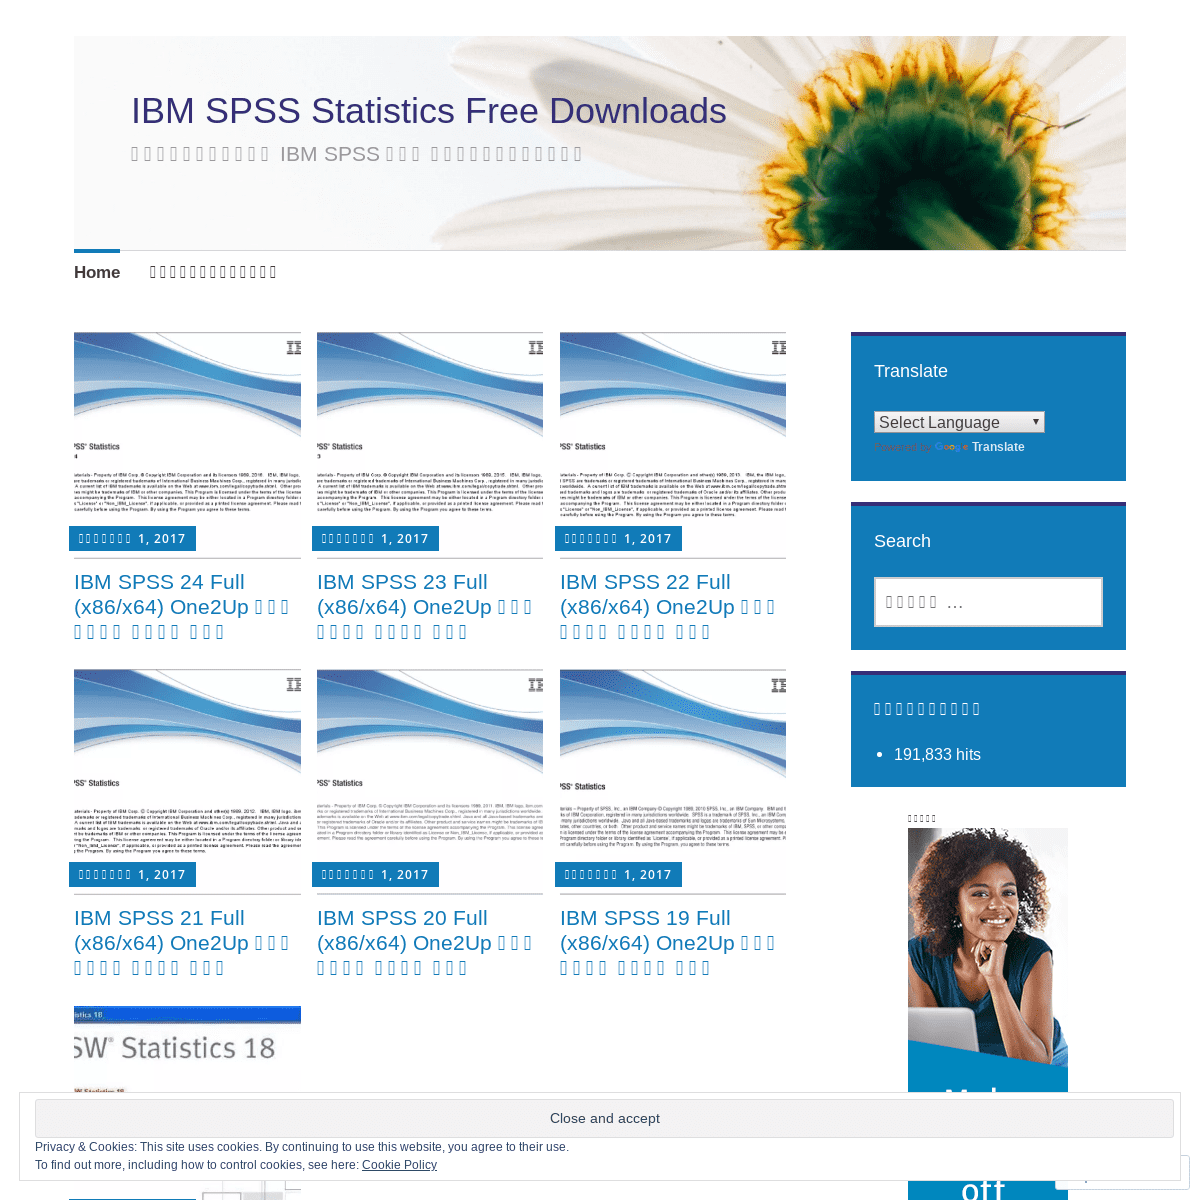 IBM SPSS Statistics Free Downloads – โหลดโปรแกรม IBM SPSS ฟรี ทุกเวอร์ชั่น